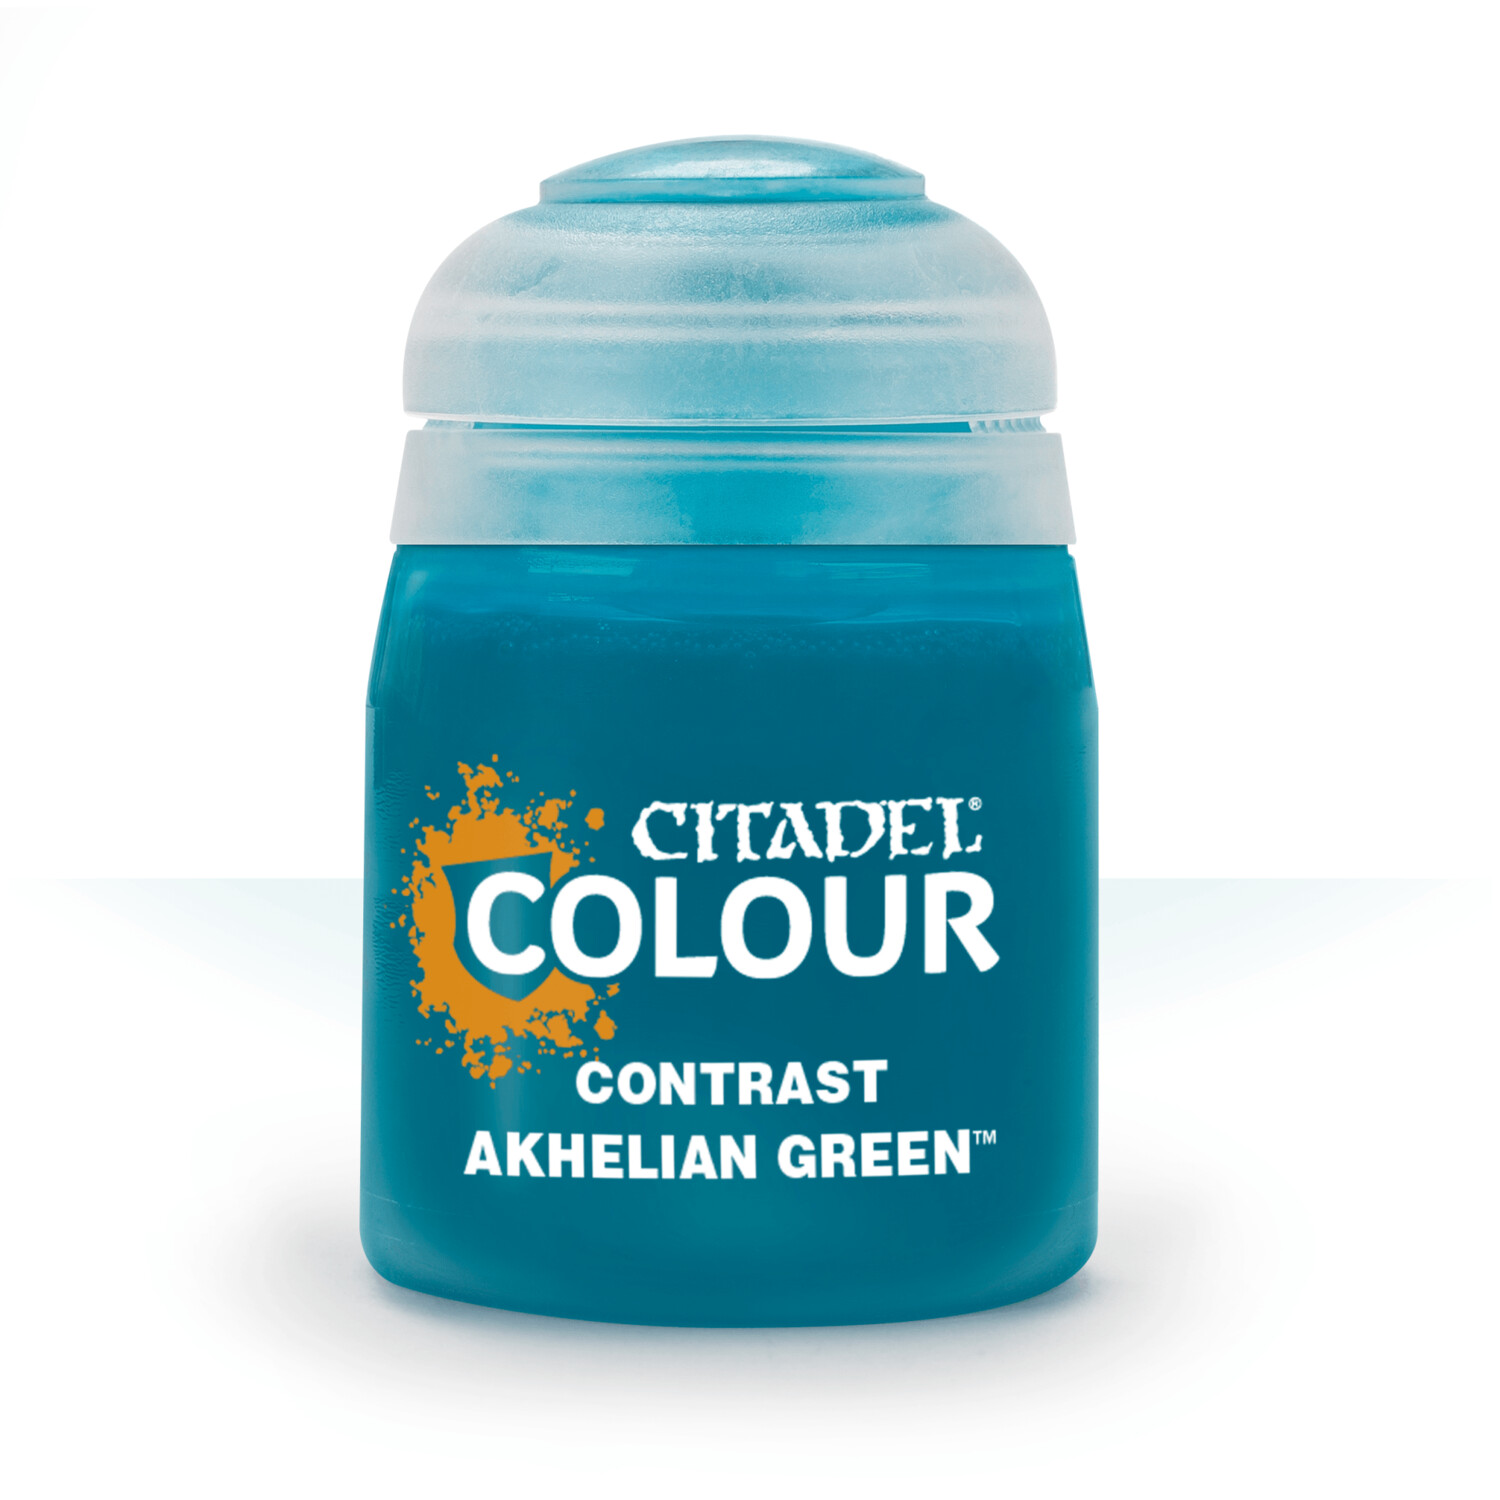 Citadel Colour – Contrast – Akhelian Green